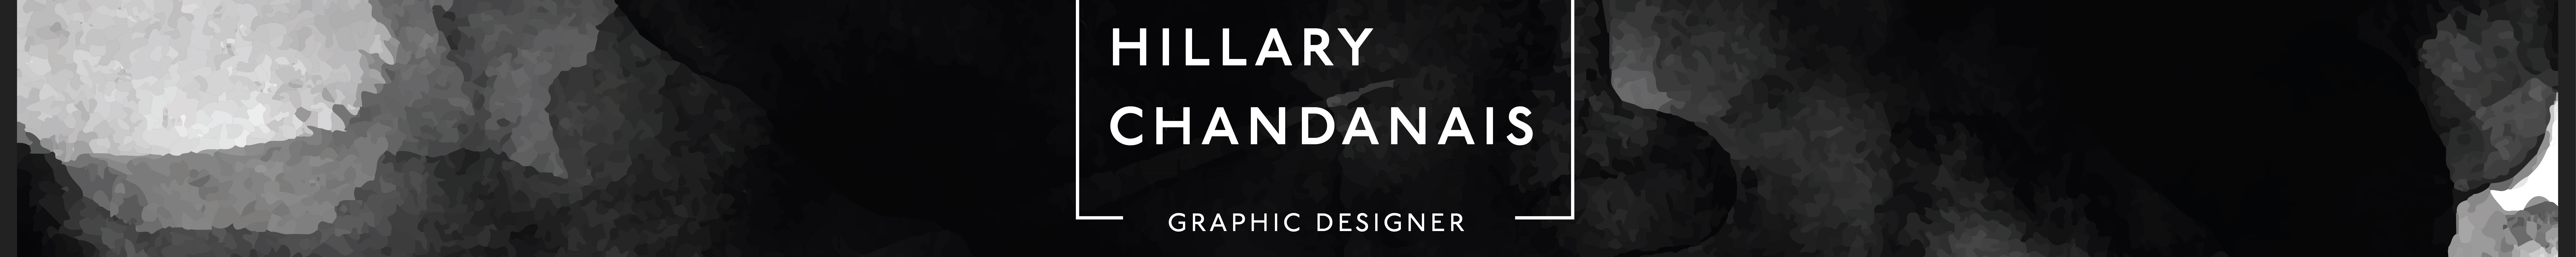 Hillary Chandanais's profile banner